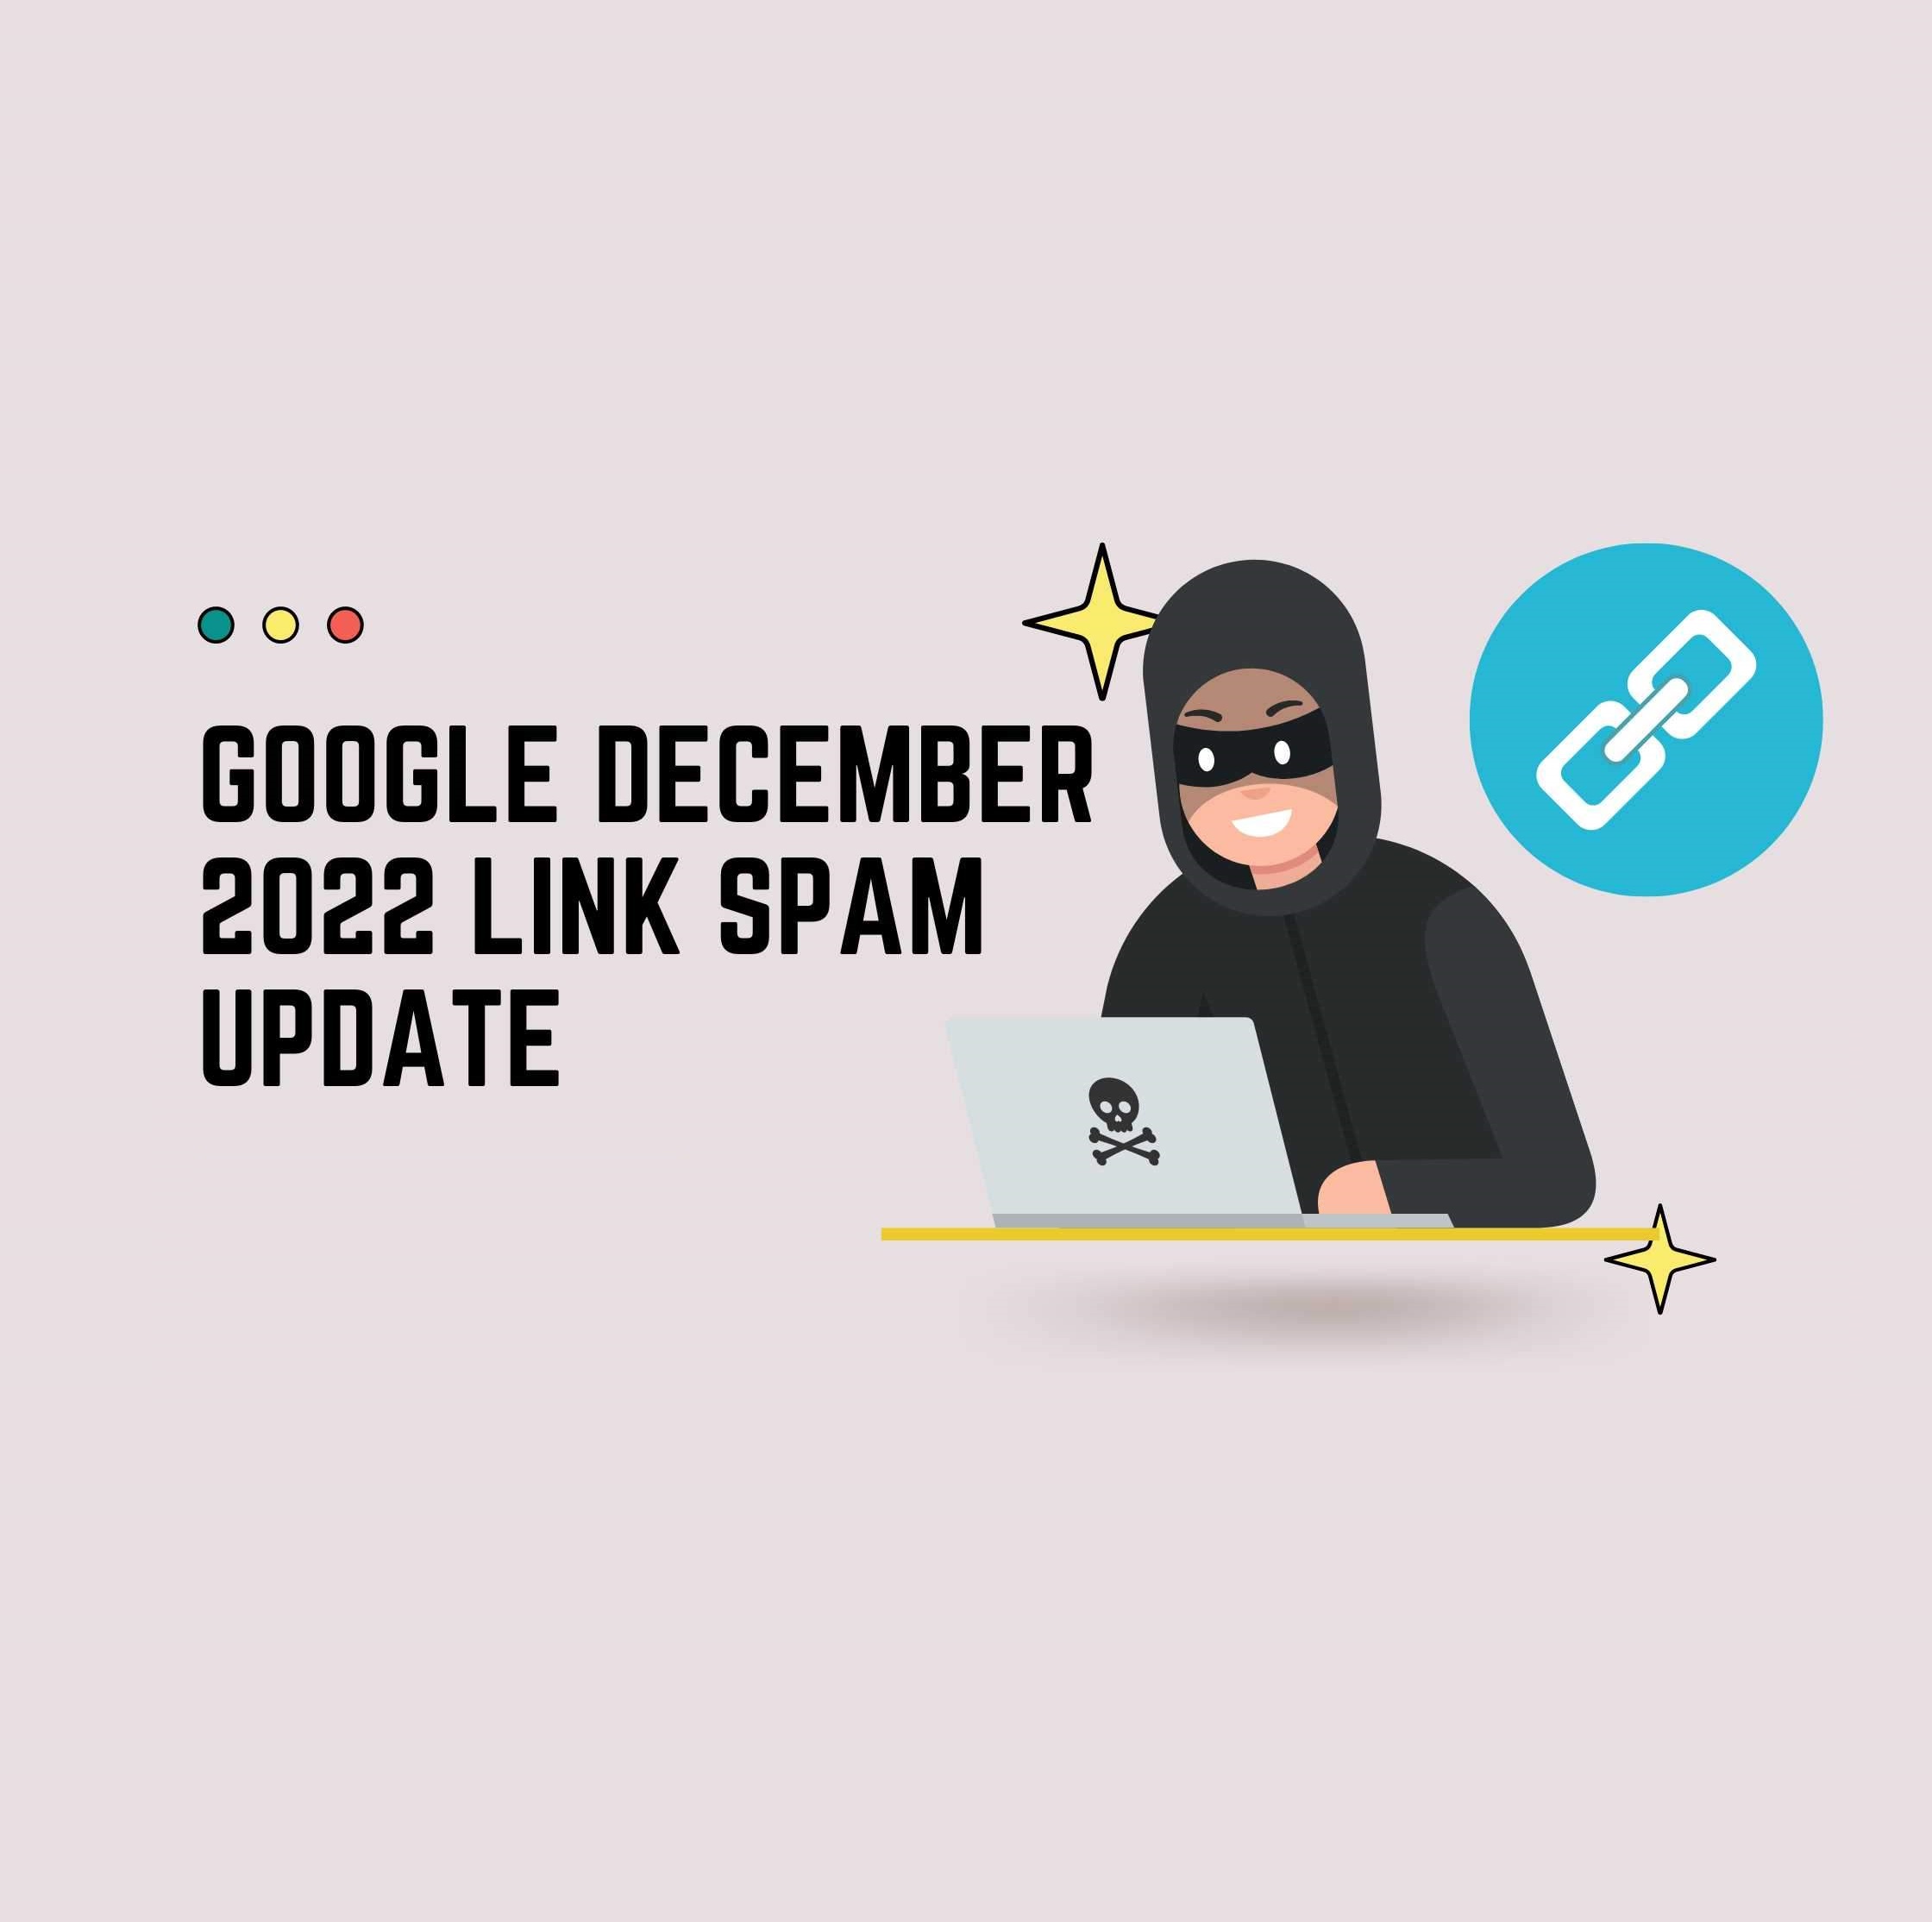 Google’s Link Spam Update